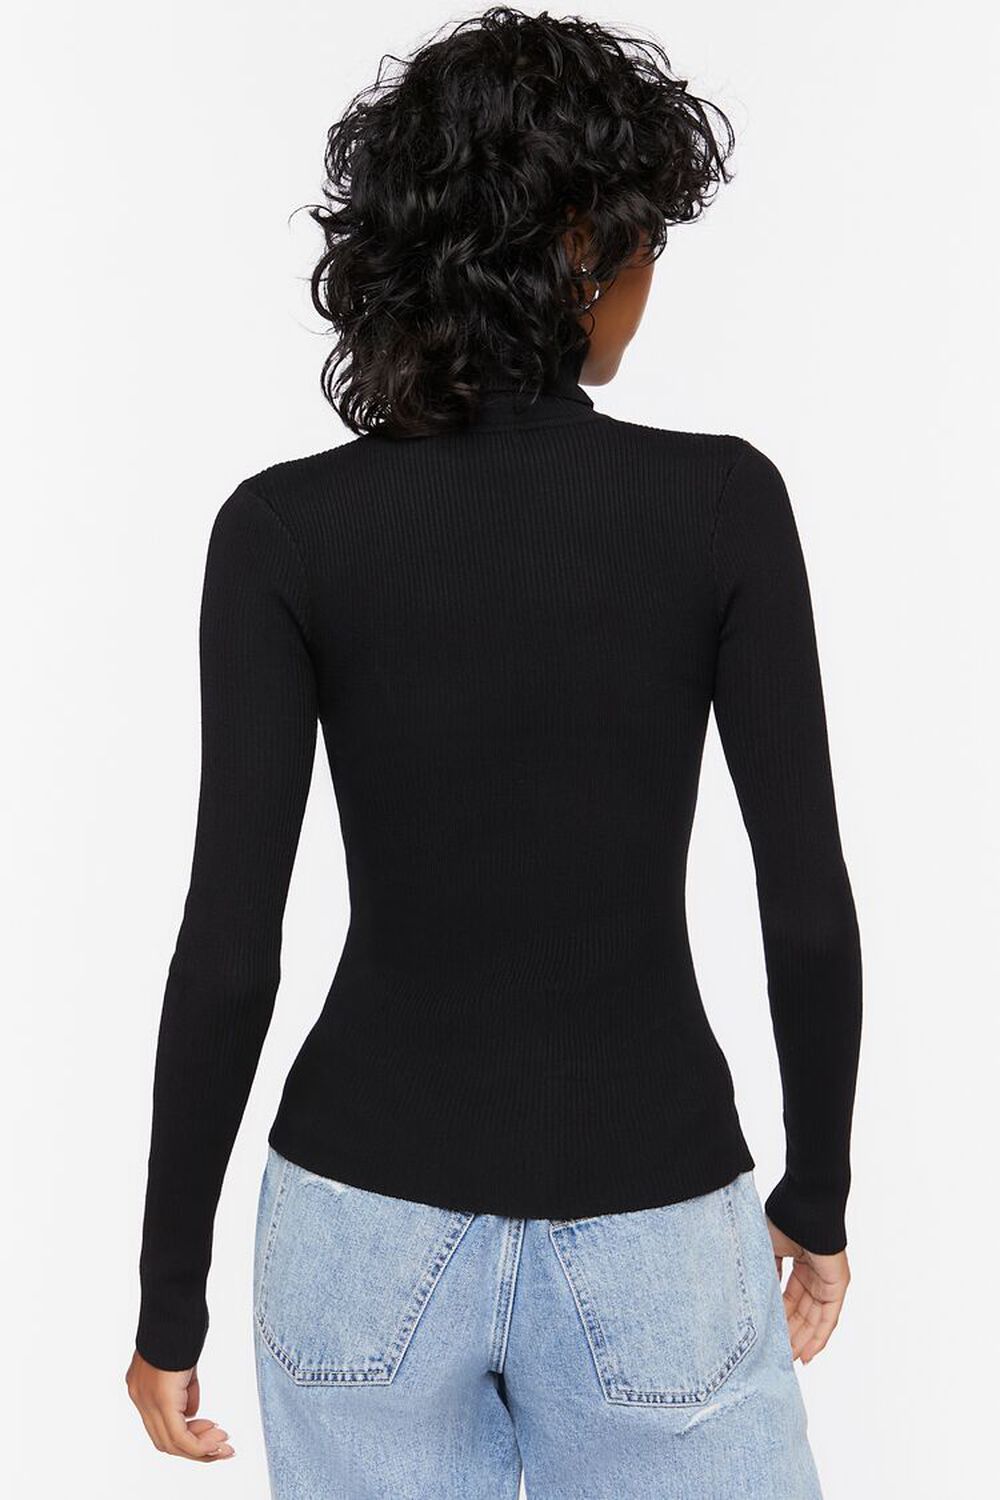 BLACK Ribbed Turtleneck Sweater-Knit Top, image 3